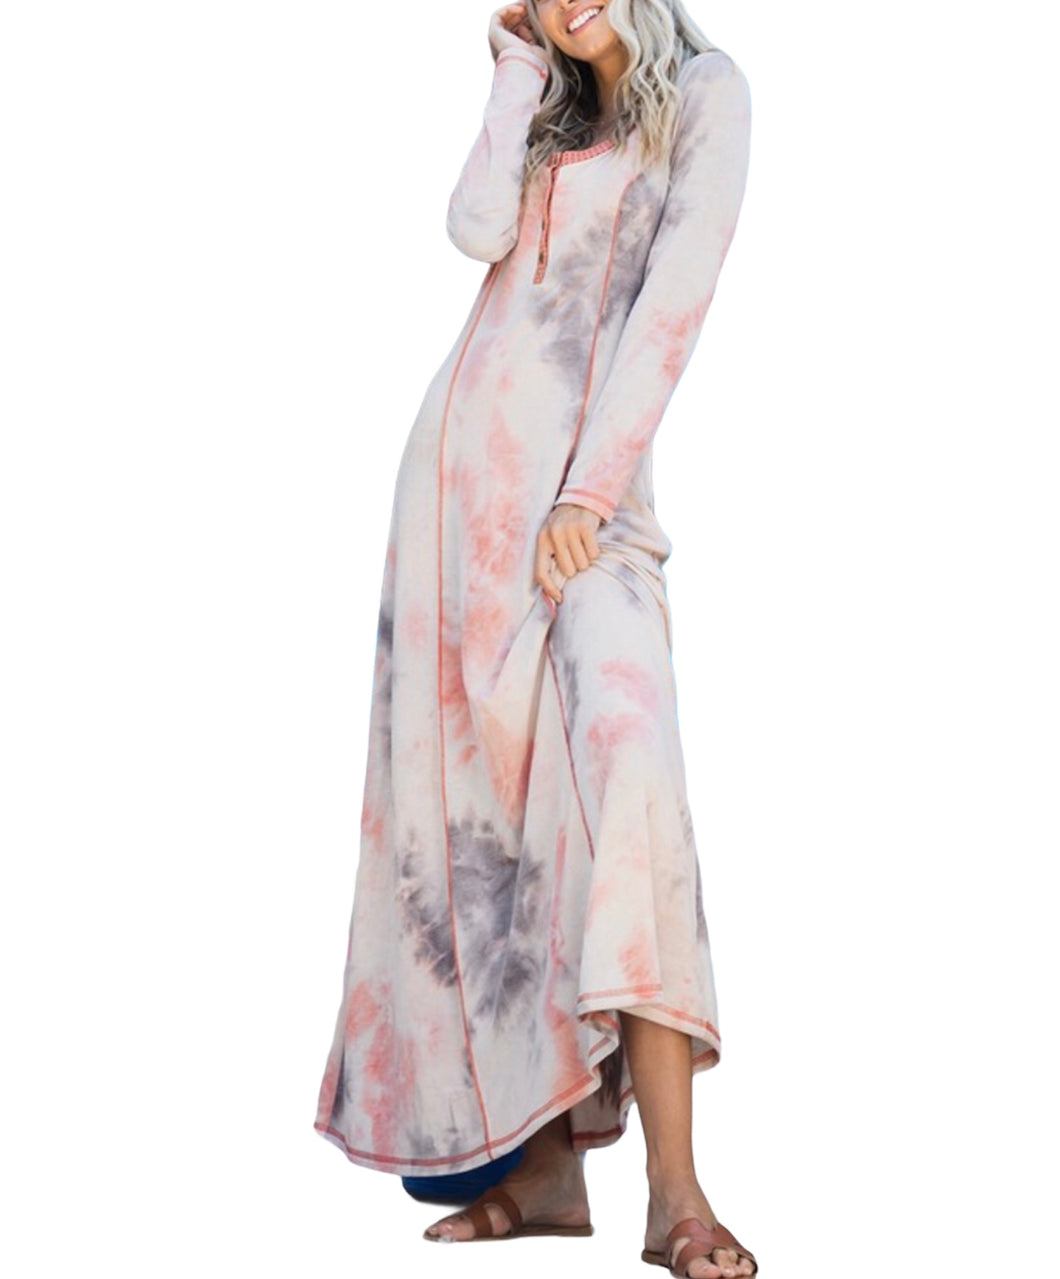 Elegantly Simple Boho Mauve/Gray Tie-Dye Maxi Dress